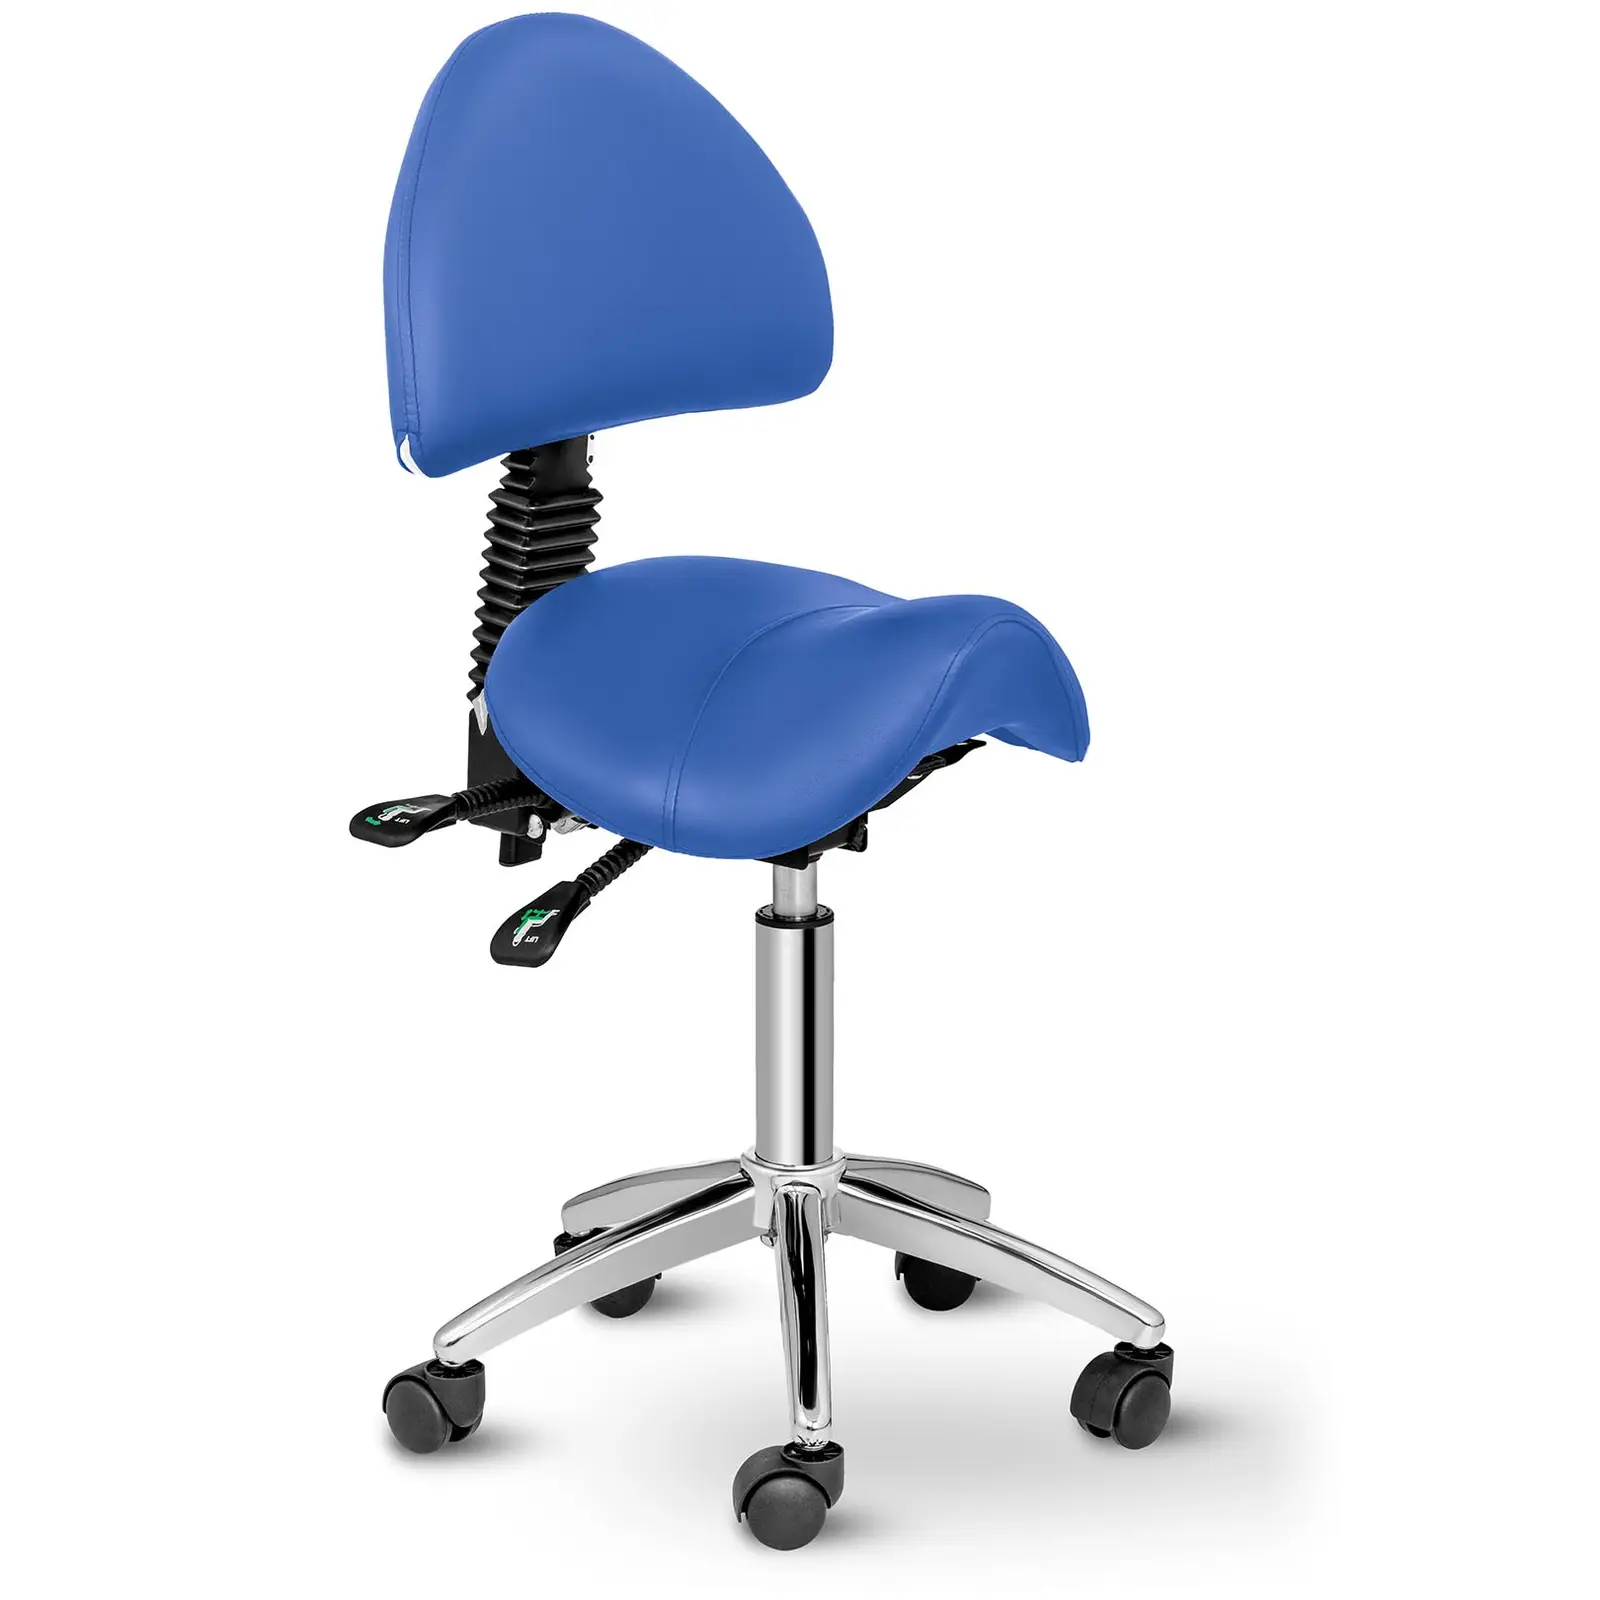 Sedlová židle - 550 - 690 mm - 150 kg - Modrá